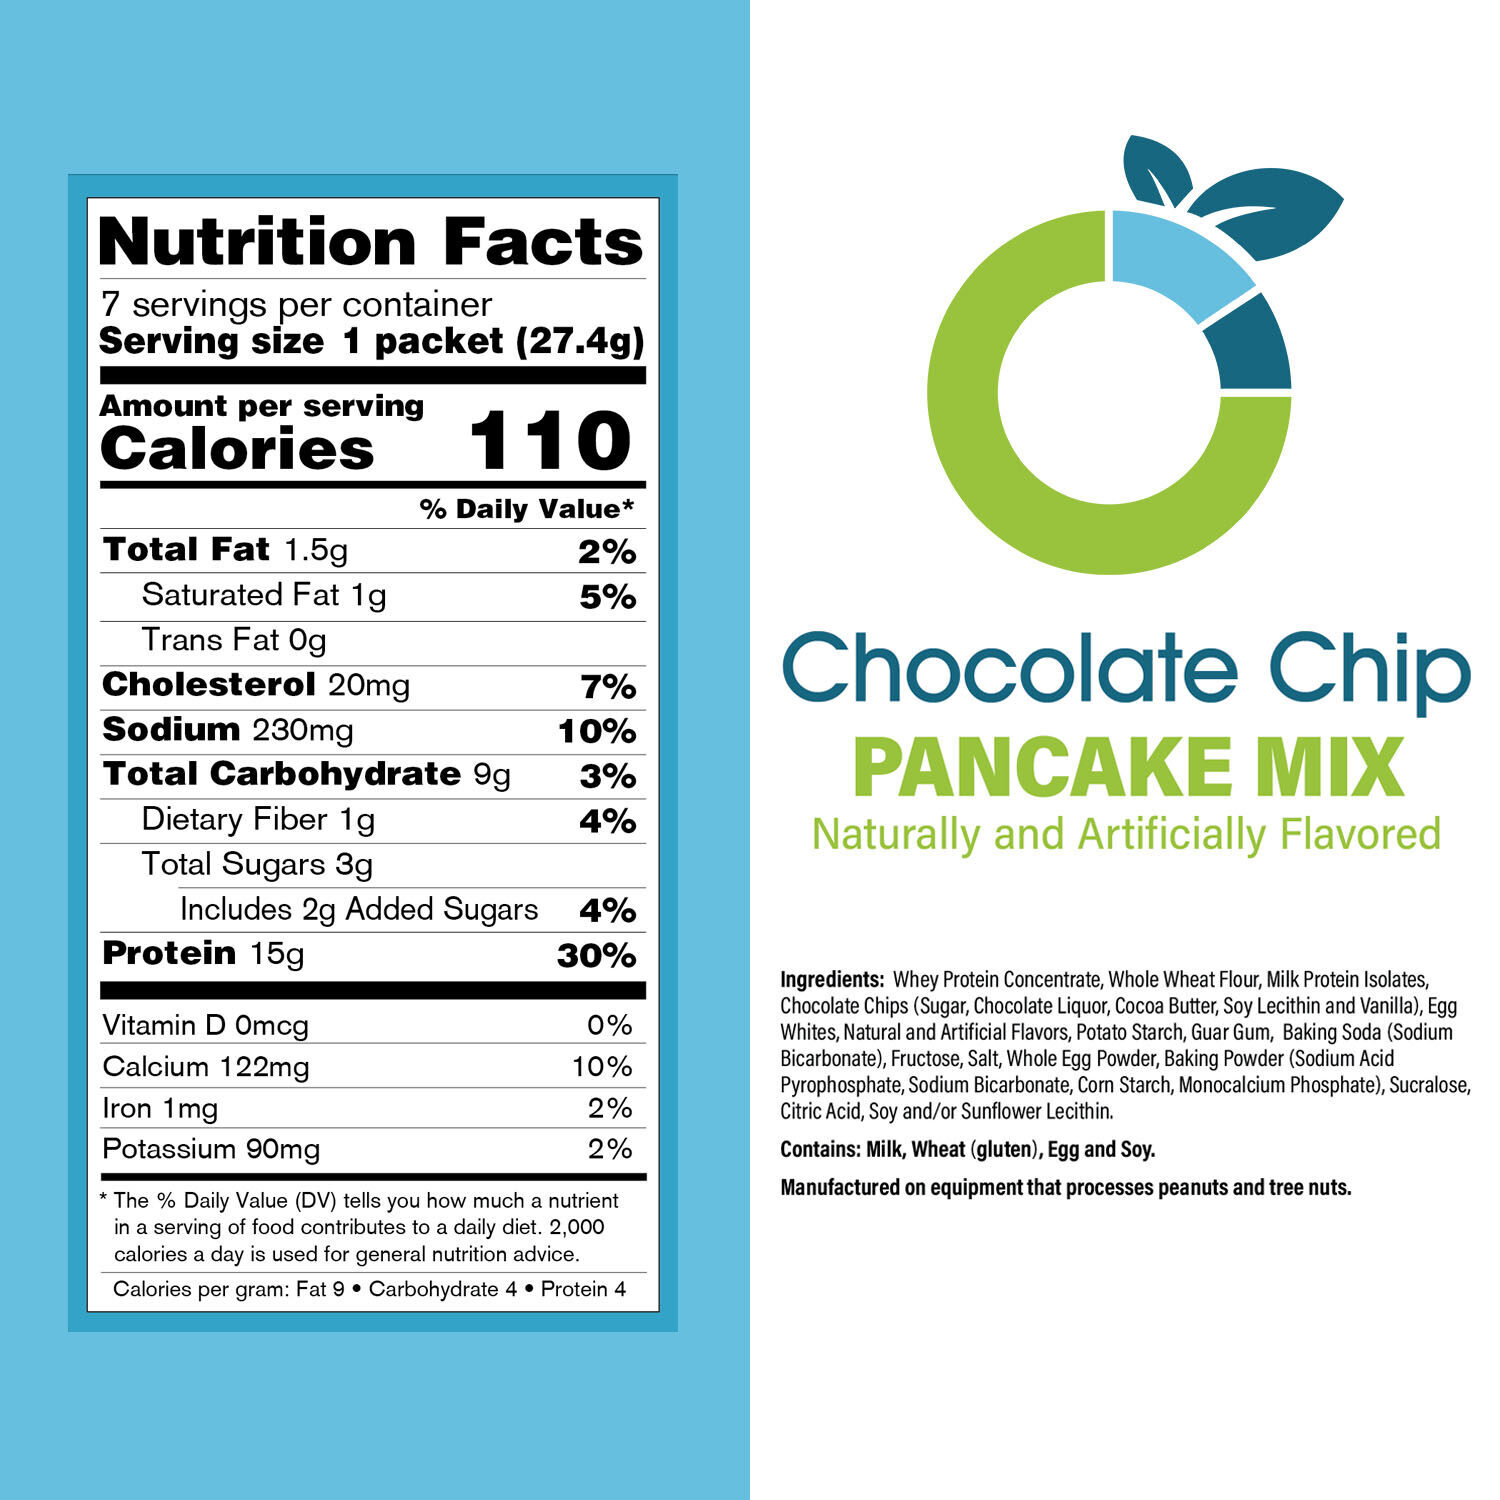 Chocolate-Chip-Pancake-Mix-Panel_05dc05dc0_78816